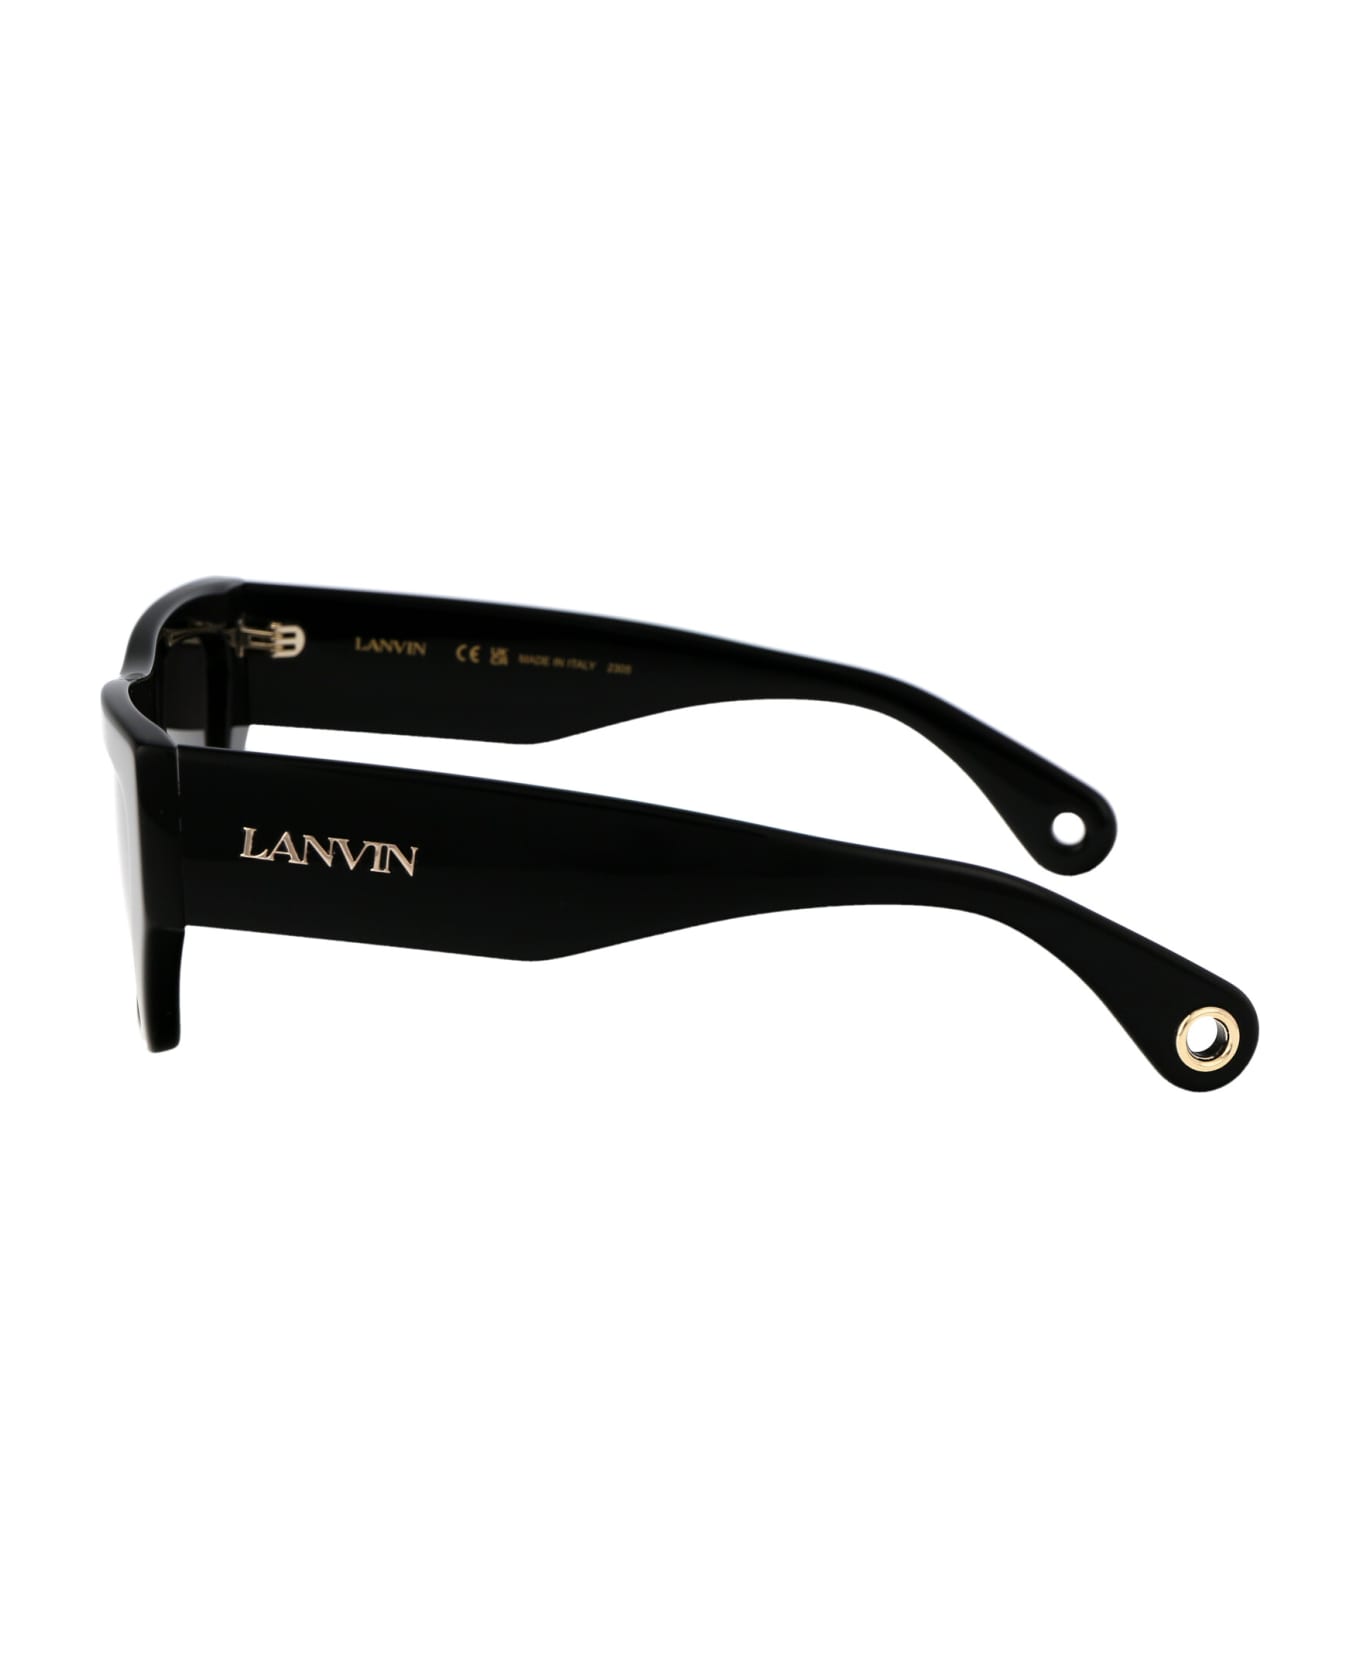 Lanvin Lnv652s Sunglasses - 001 BLACK サングラス